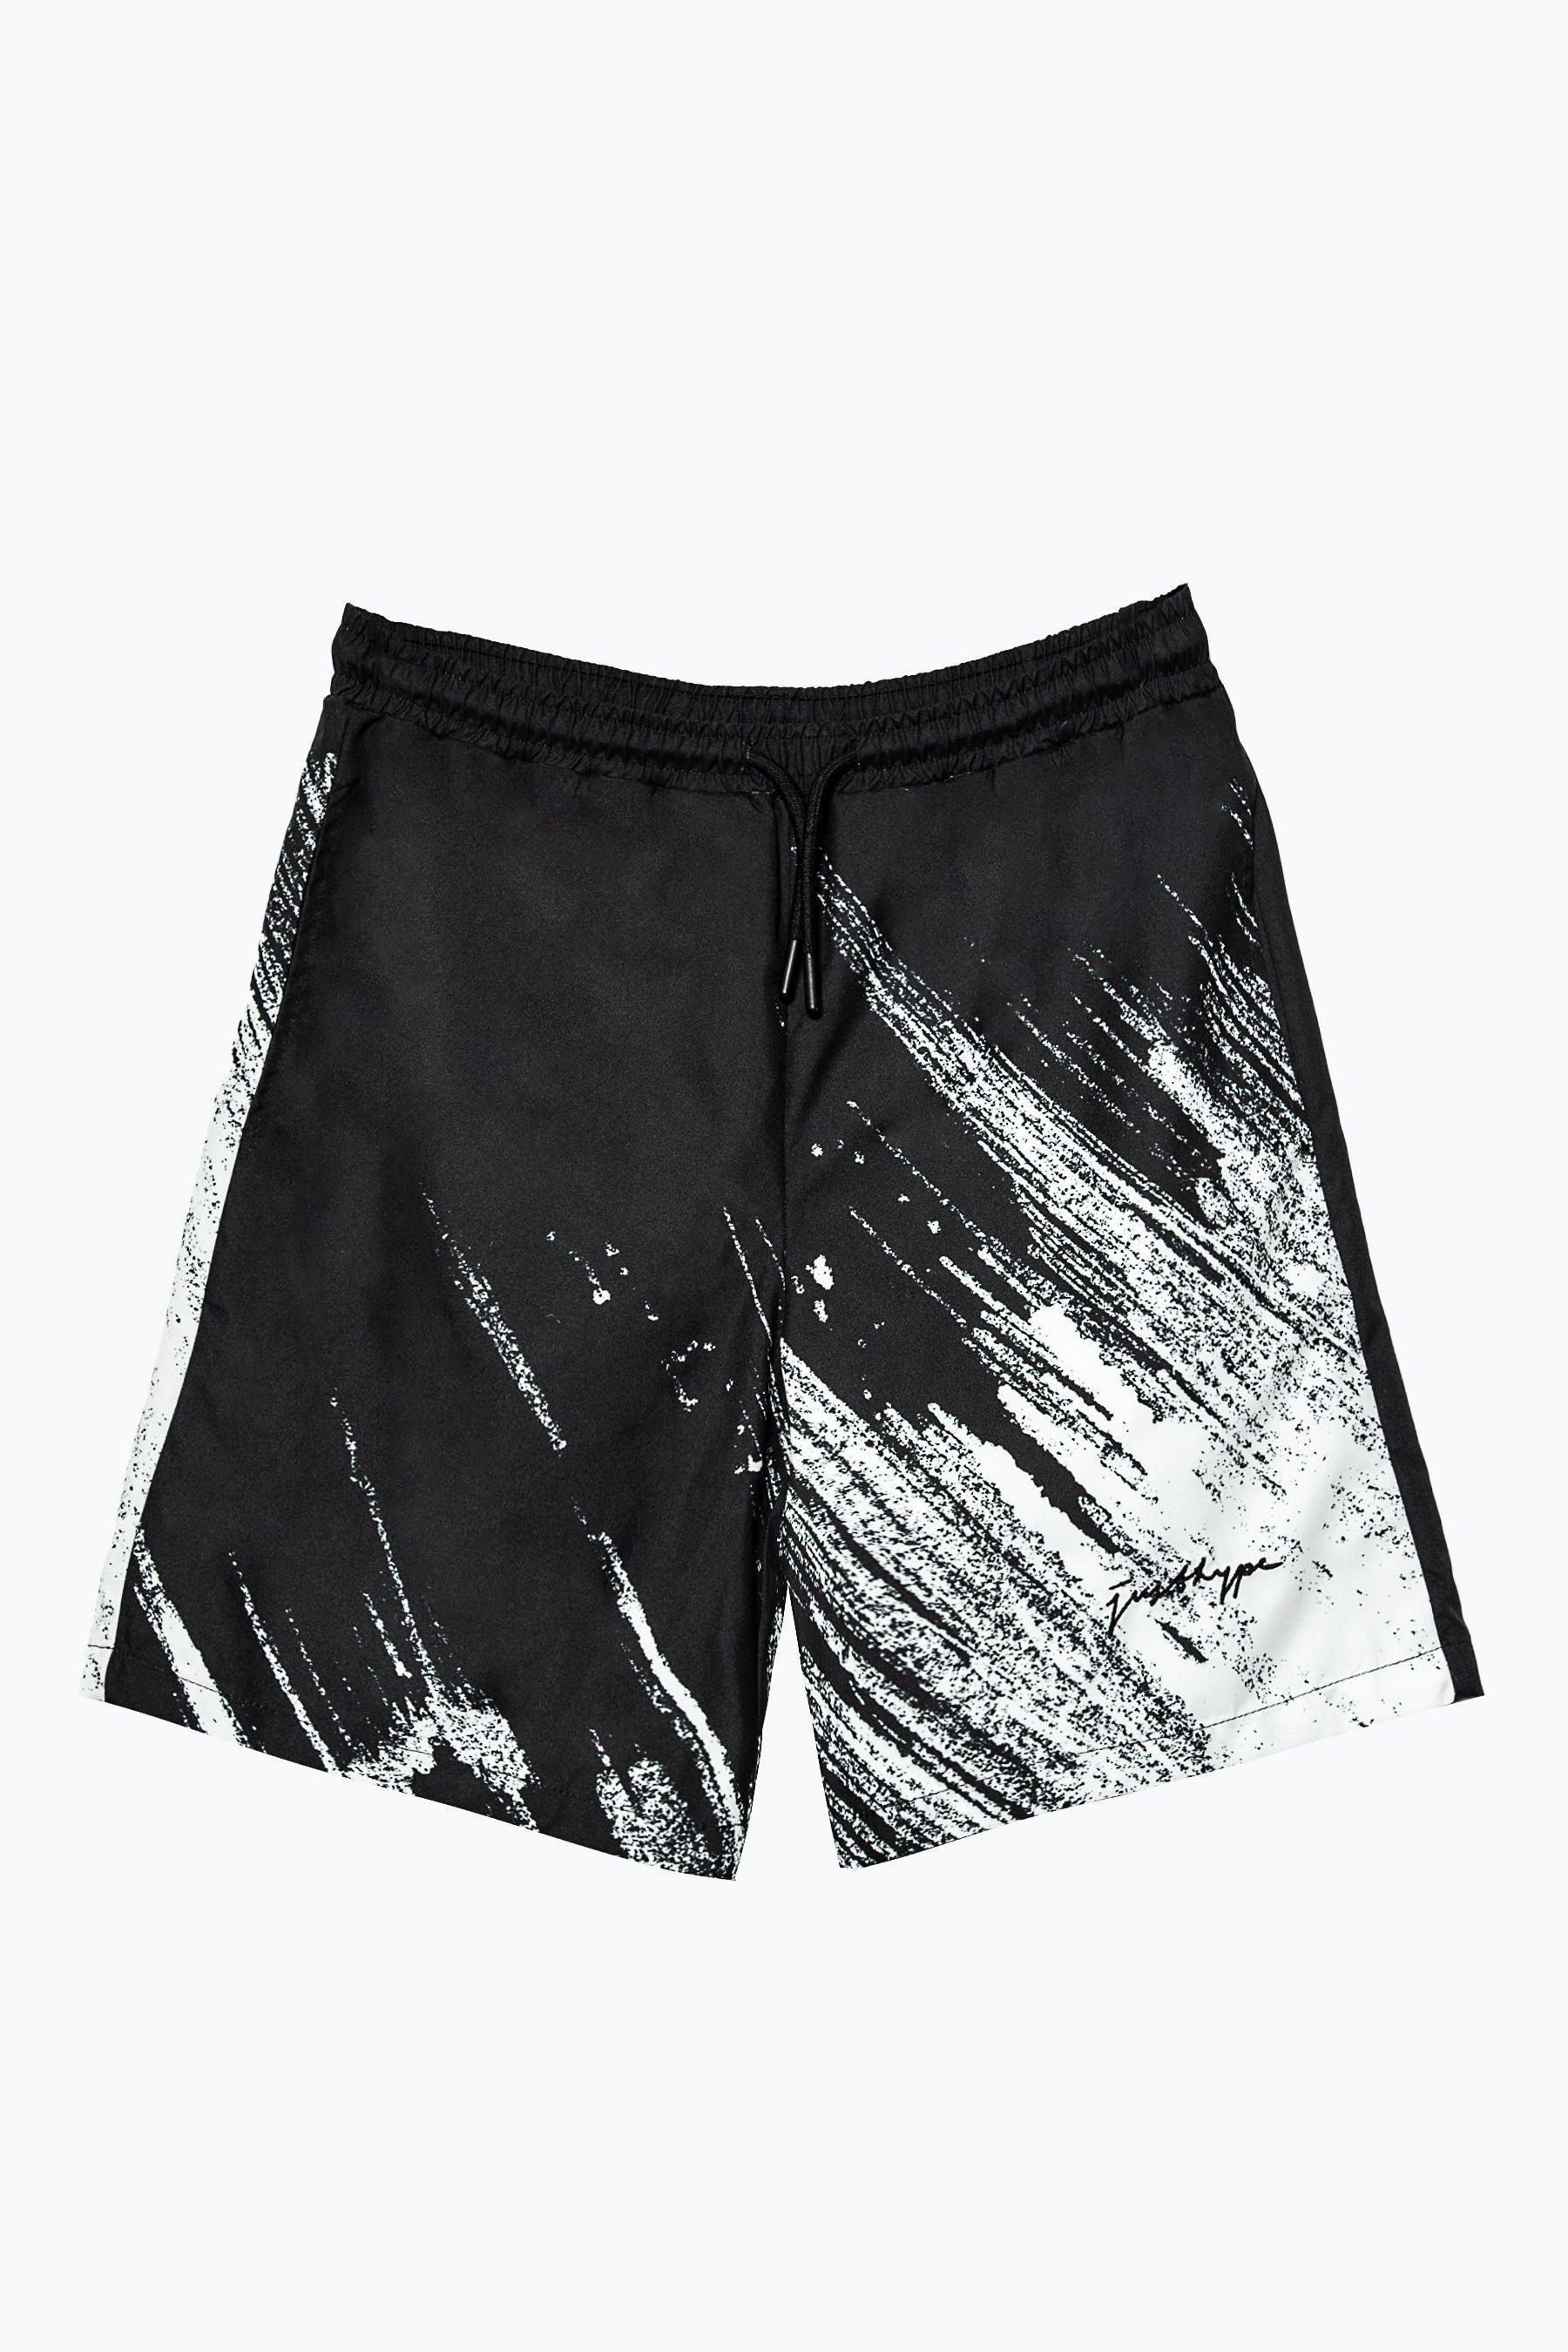 Multi Black Scratch Scribble Swim Shorts